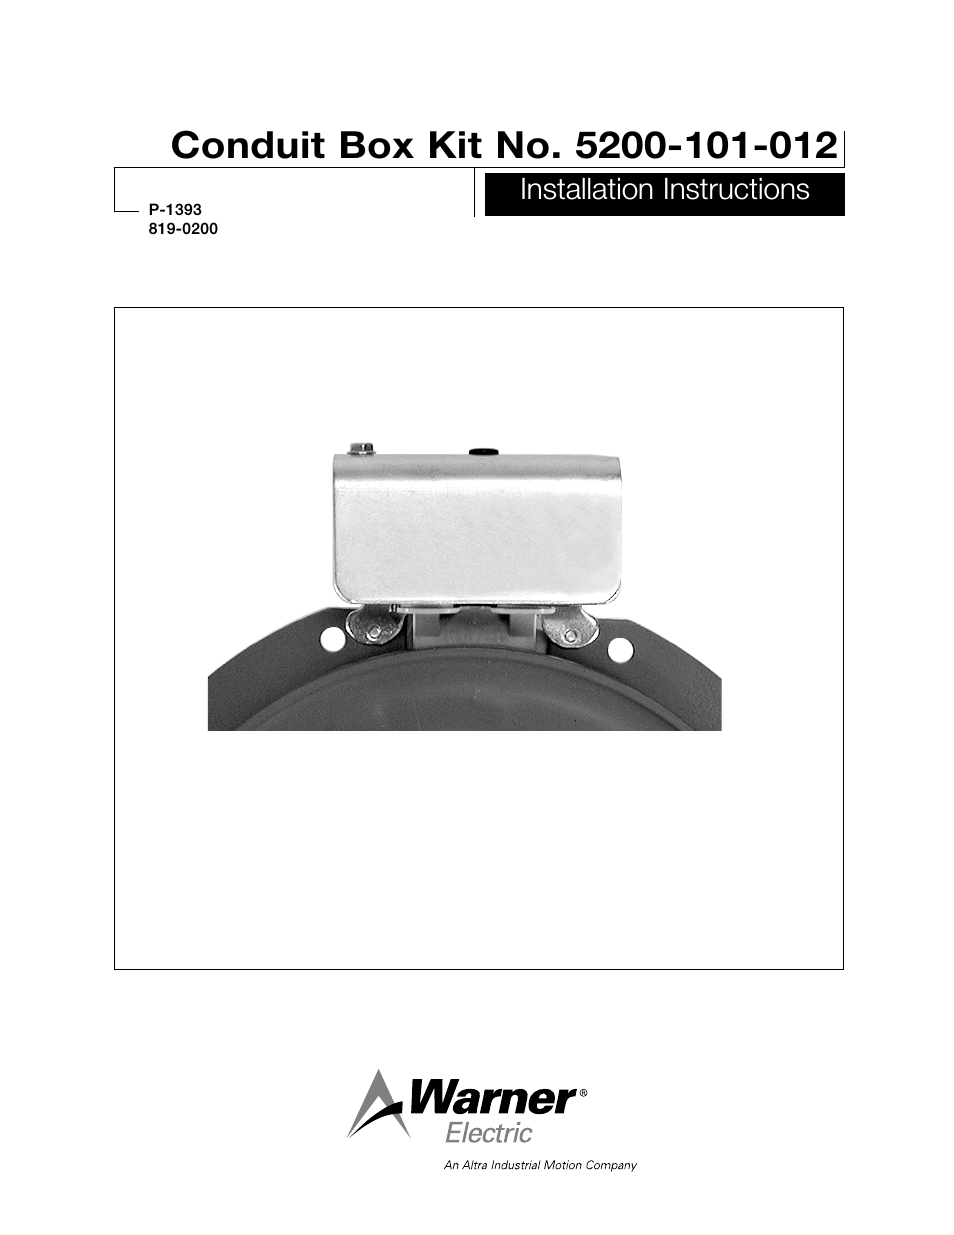 5200-101-012 Conduit Box Kit